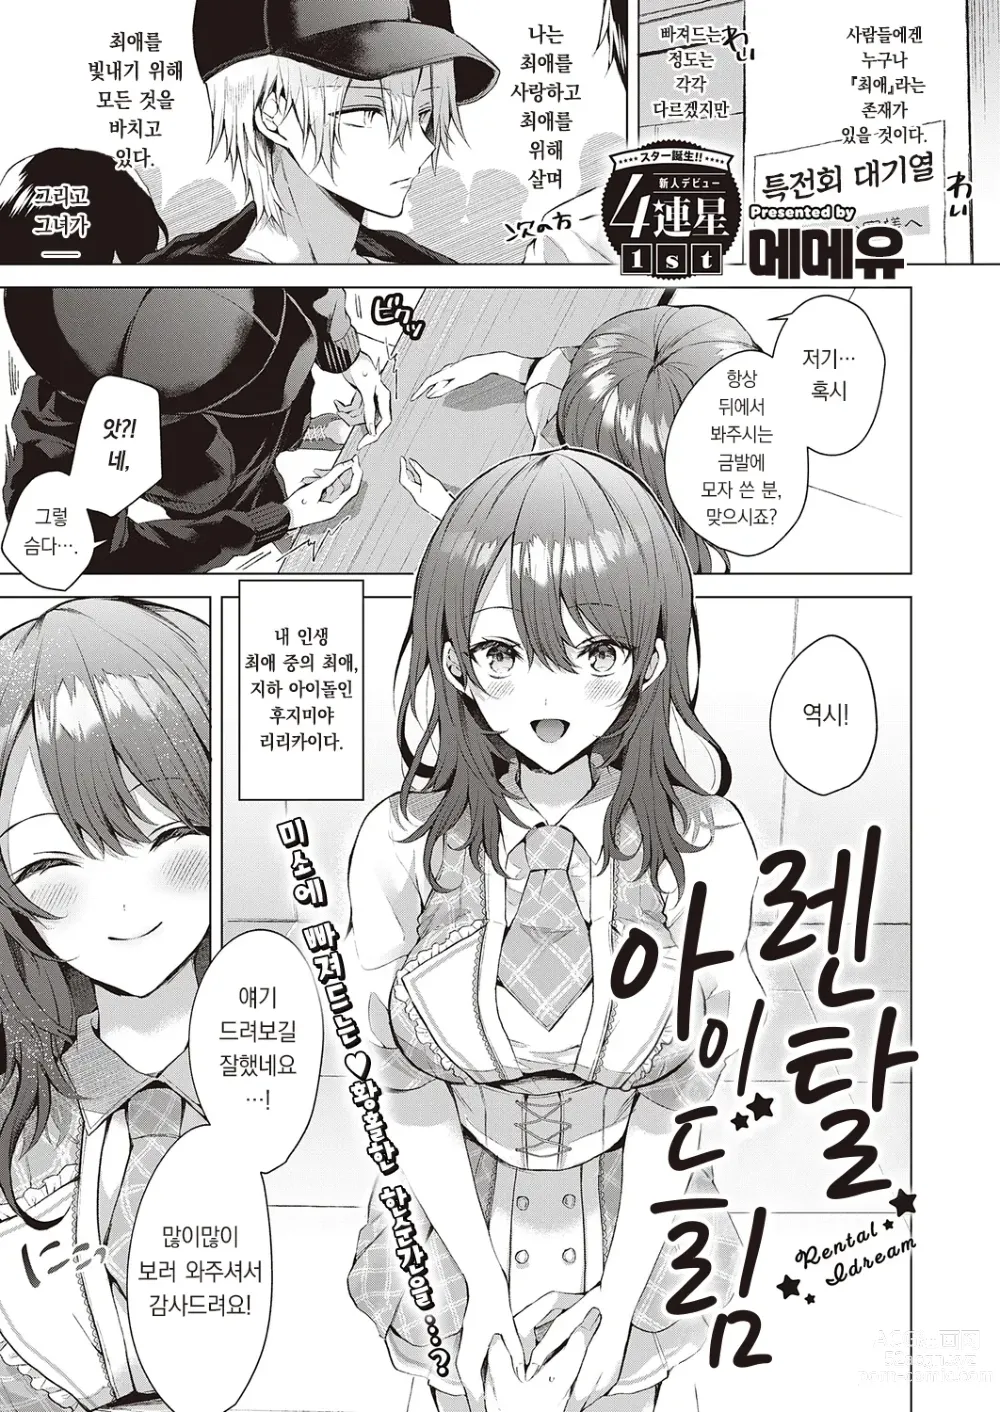 Page 2 of manga 렌탈 아이드림